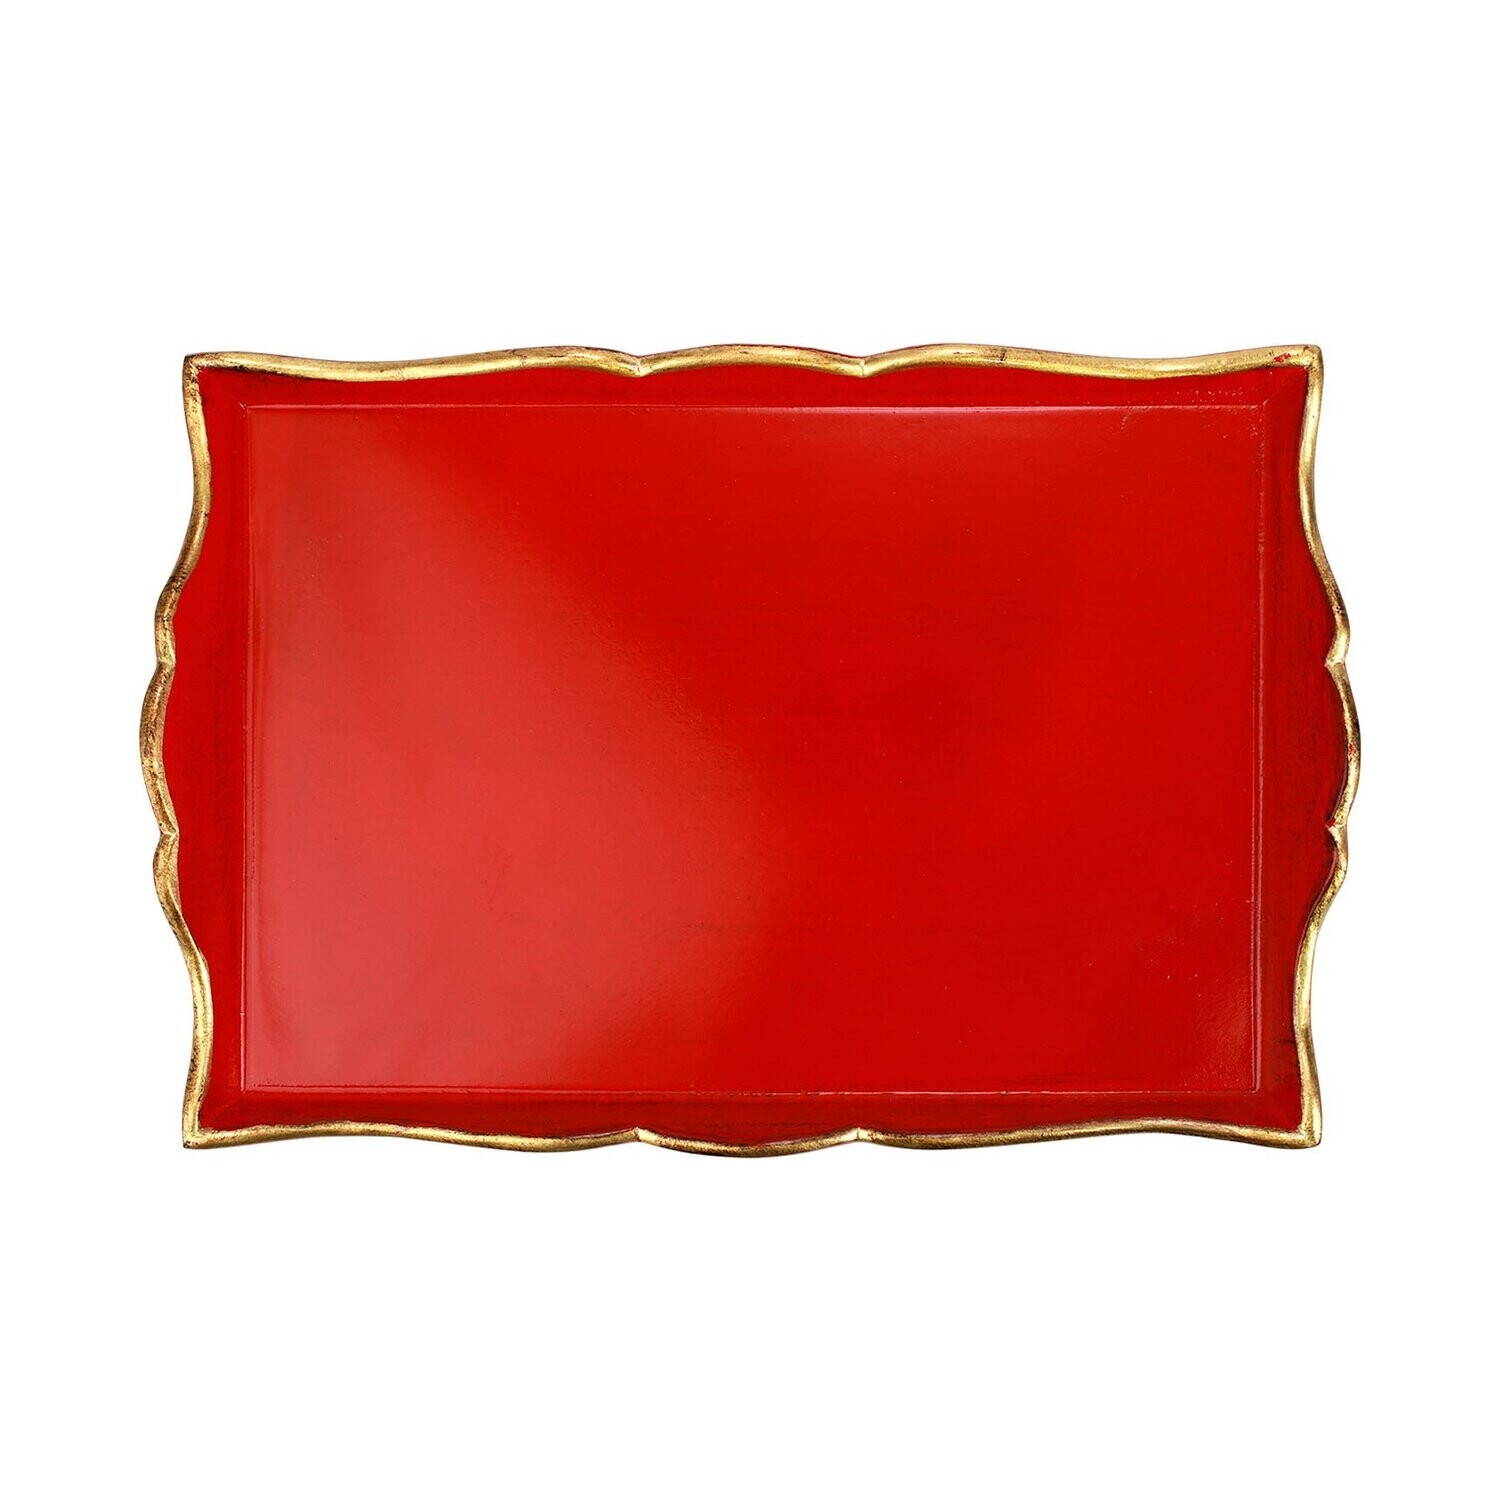 VIETRI Florentine Red MEDIUM Rectangular Tray